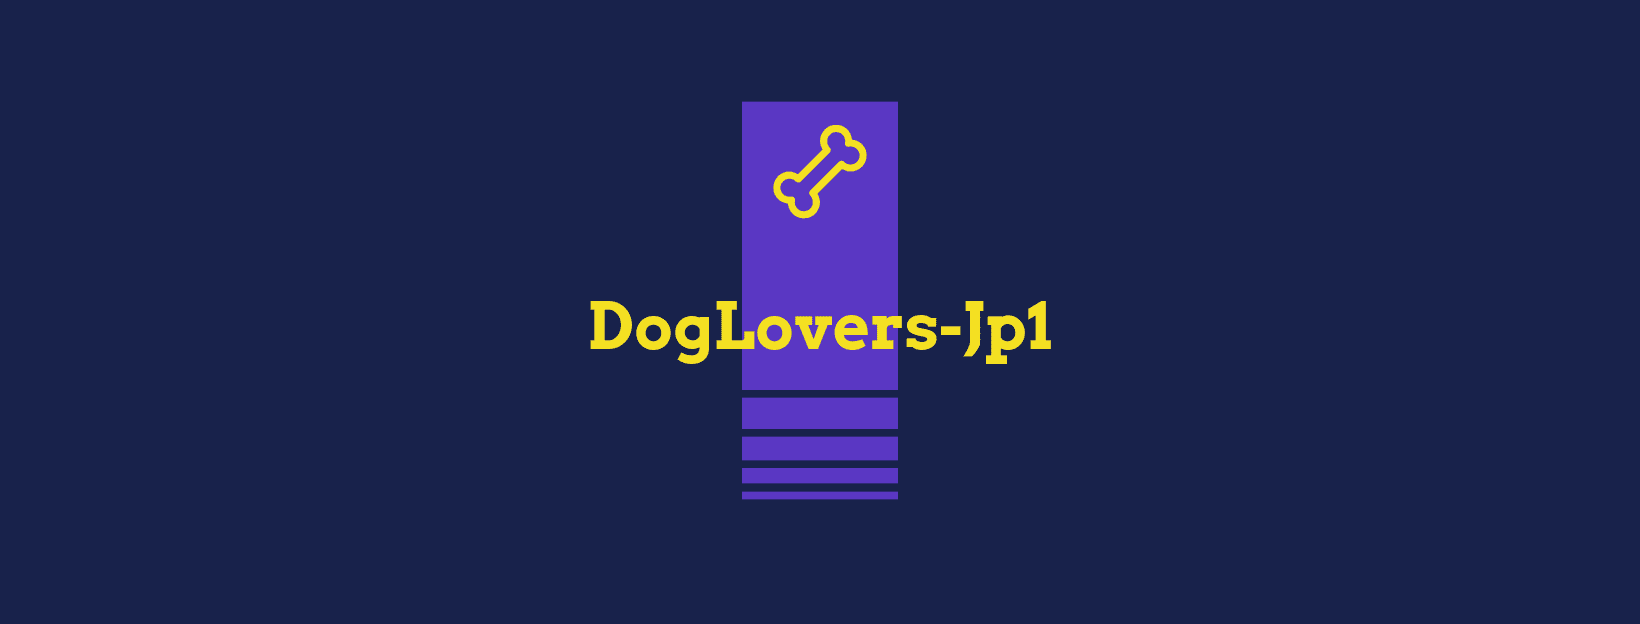 DogLovers.jp1 ヘッダー画像